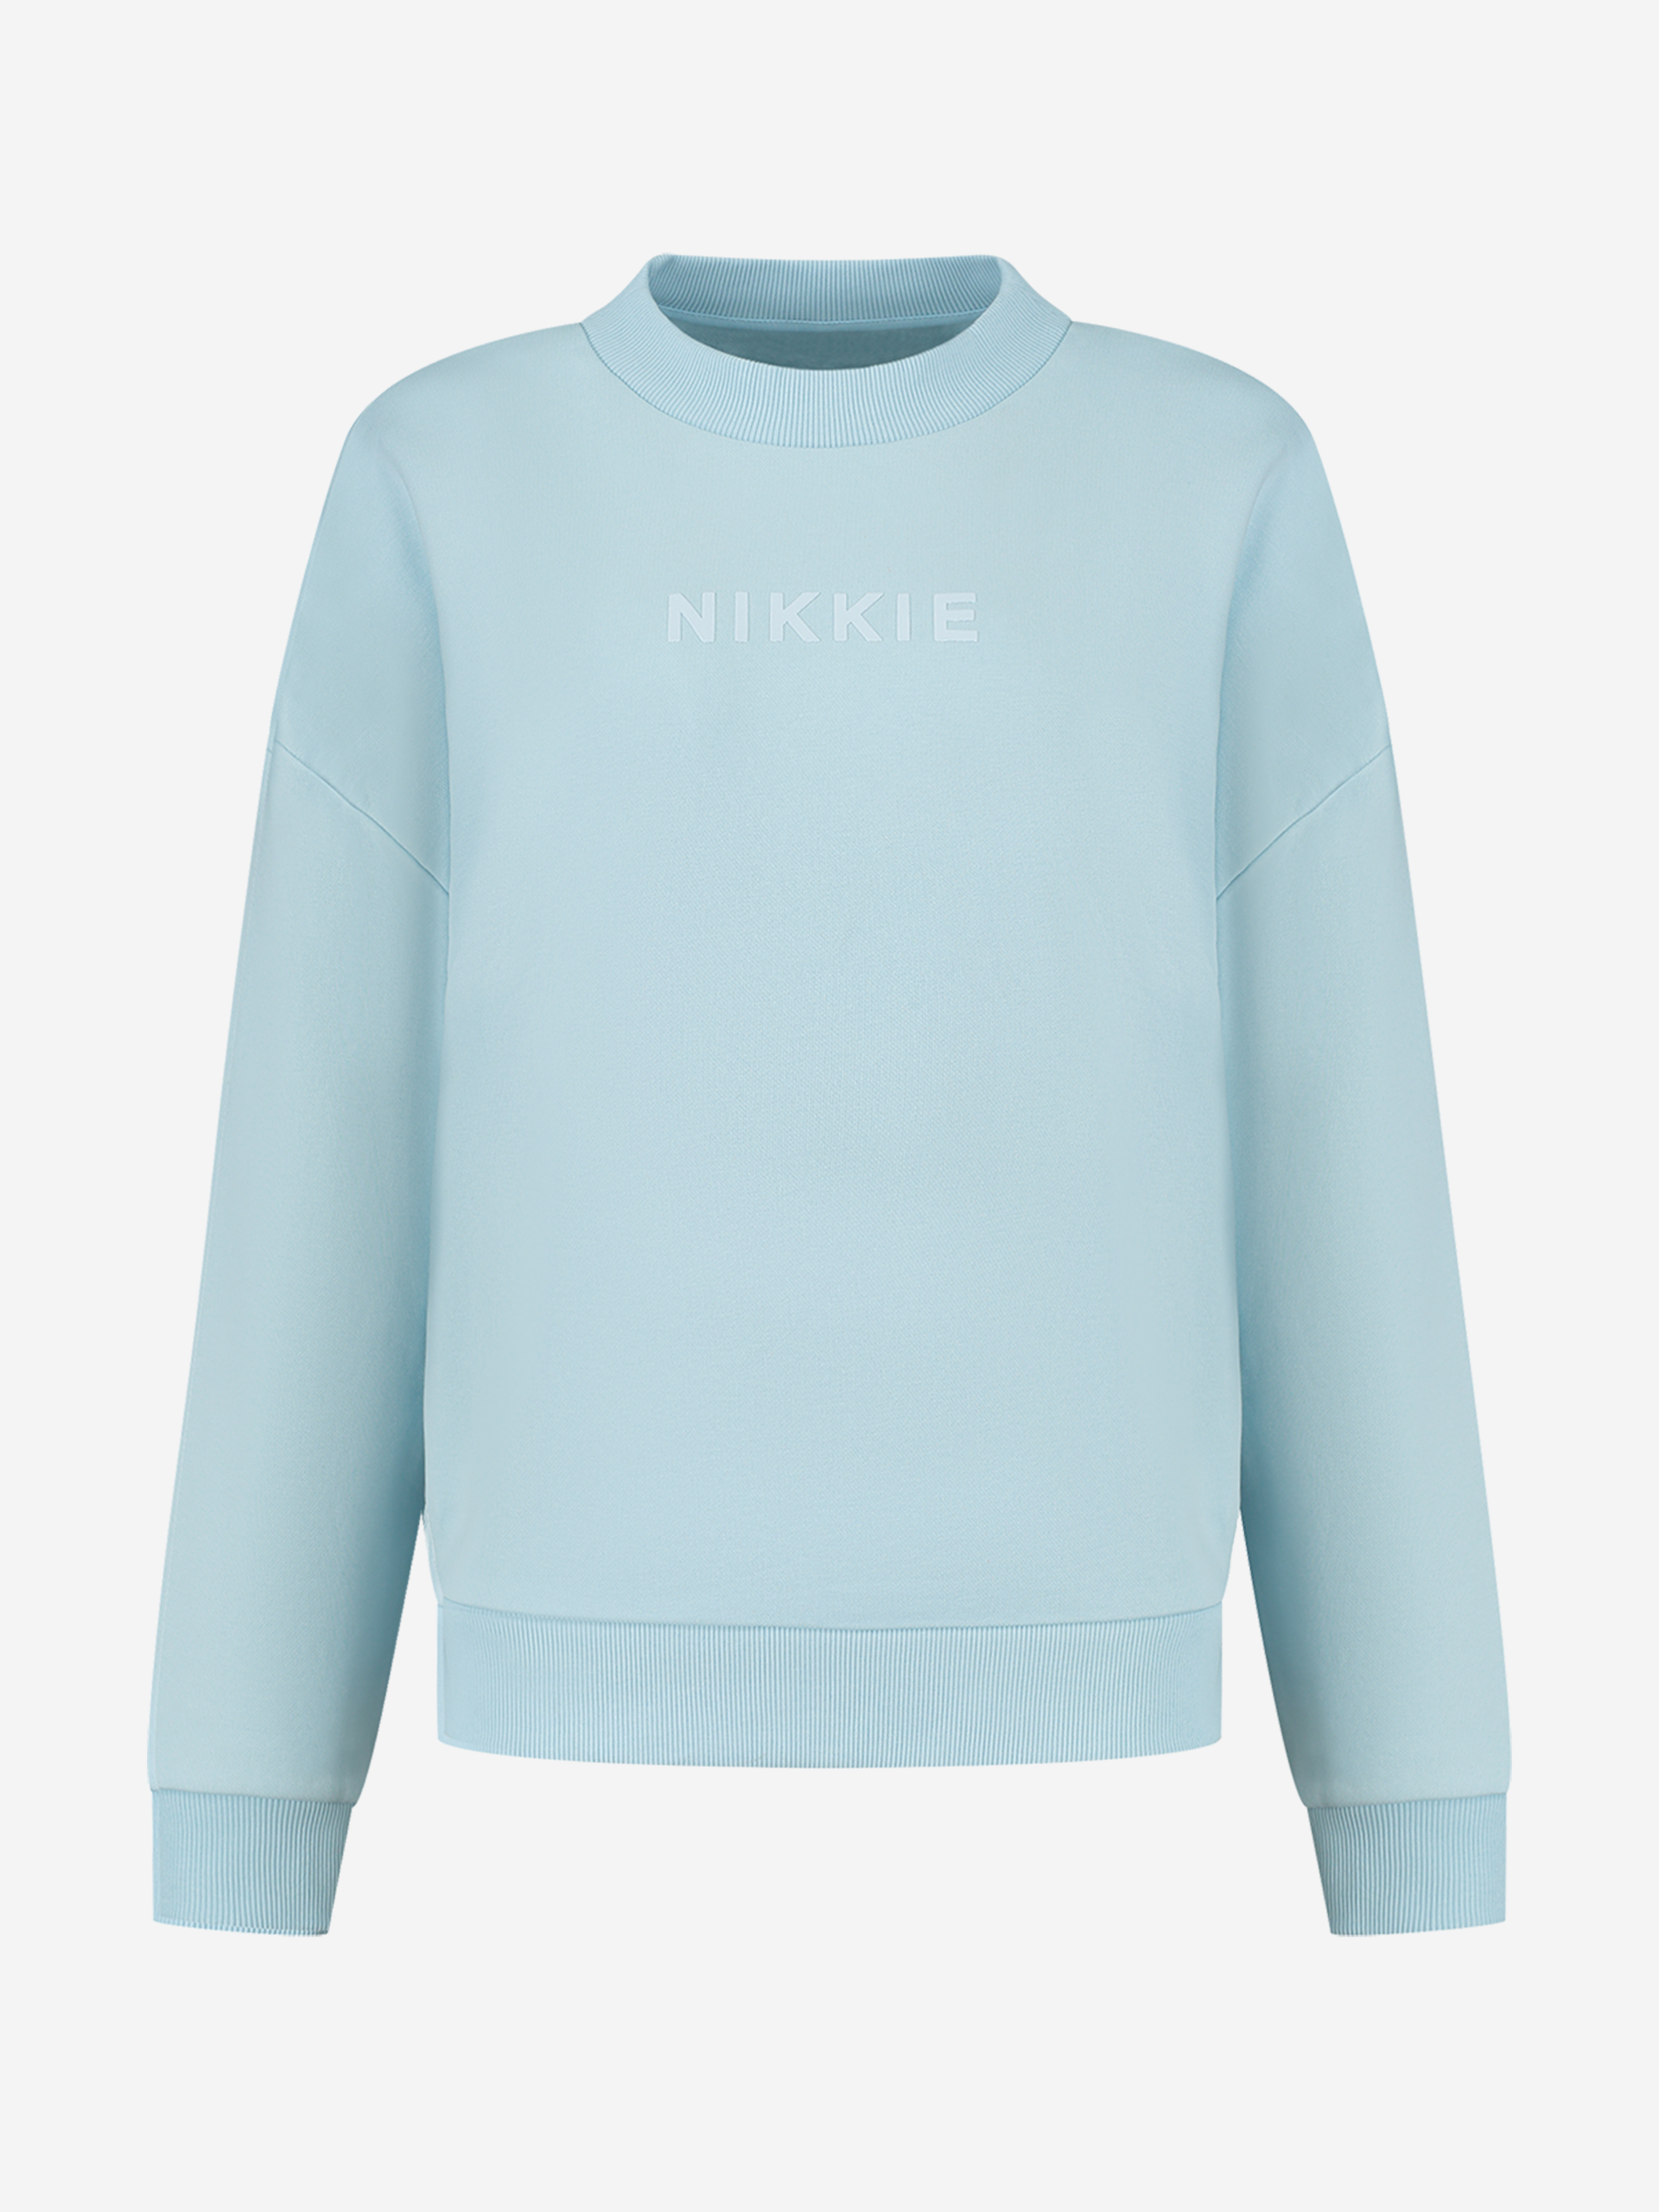 NIKKIE sweater